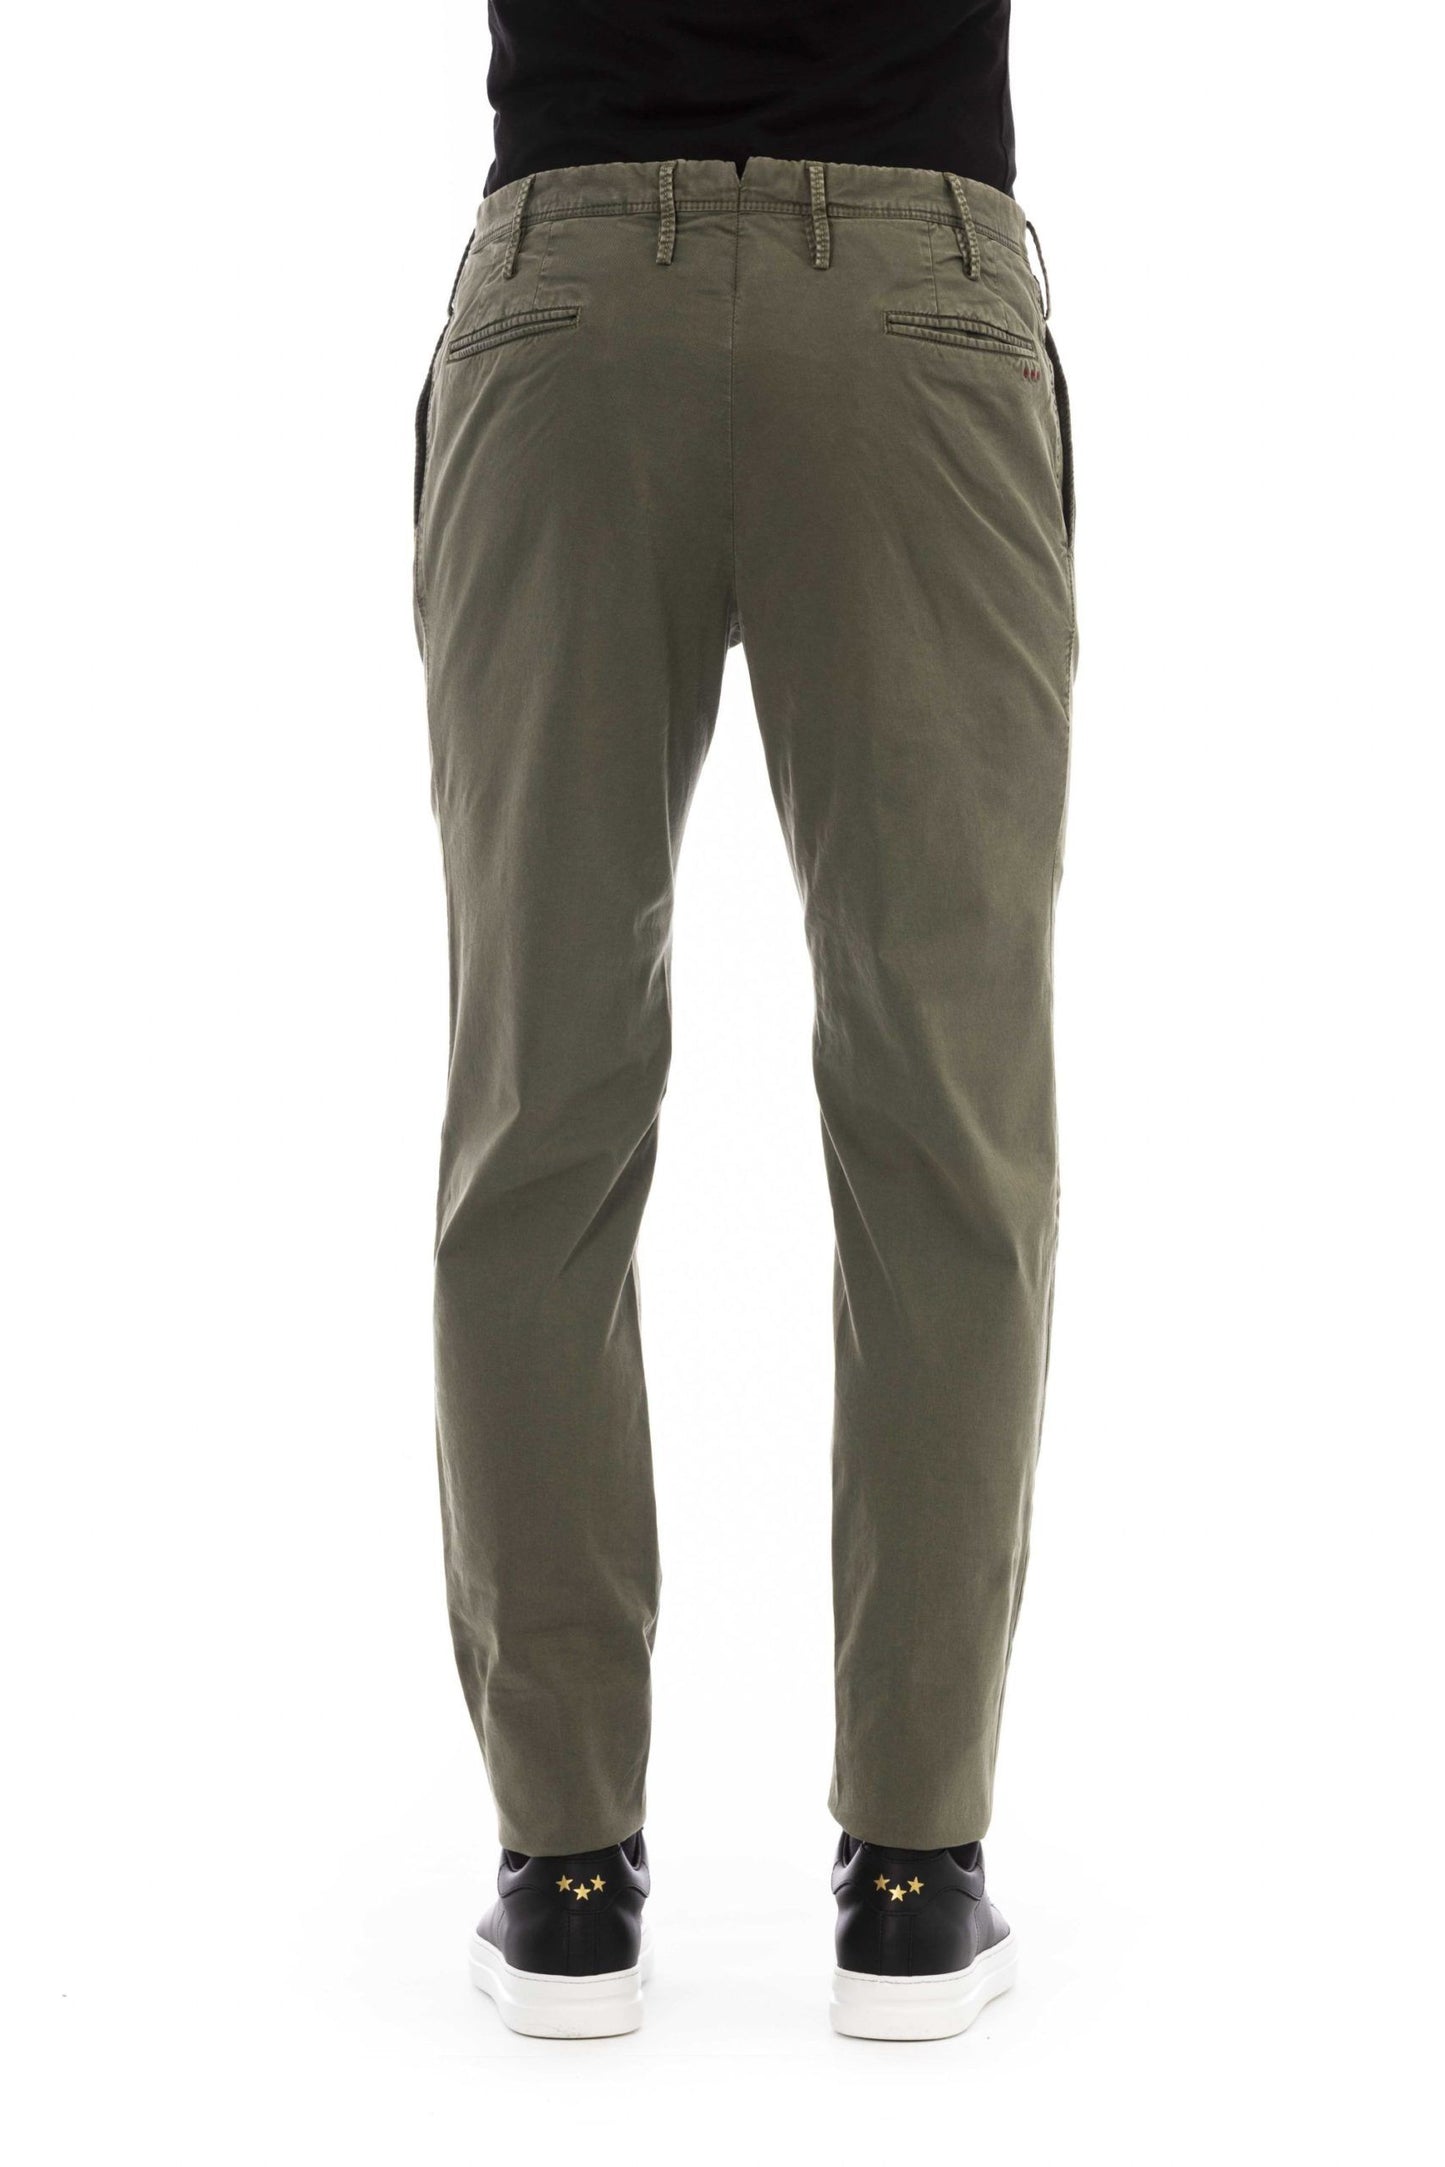 Sleek Army Men's Trousers for Everyday Elegance